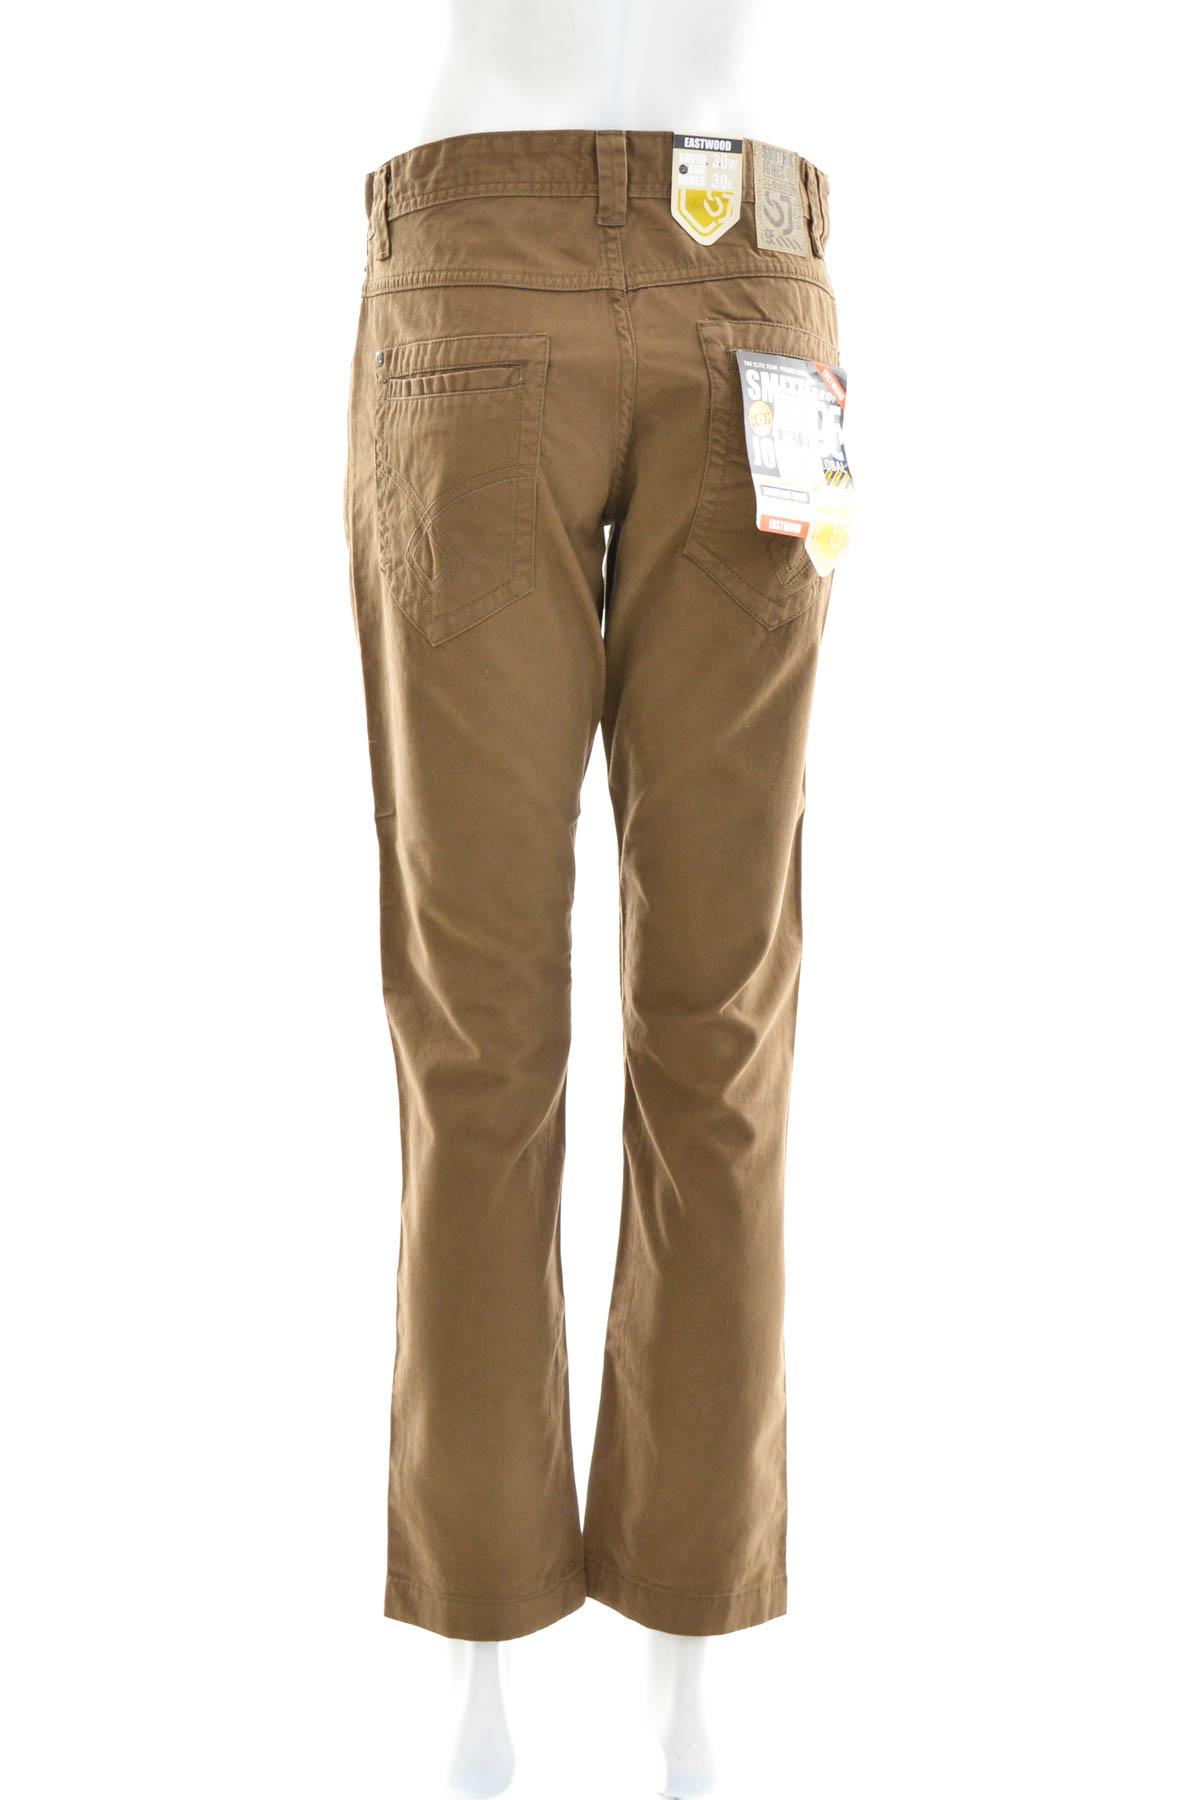 Men's trousers - Smith & Jones SJ95 - 1